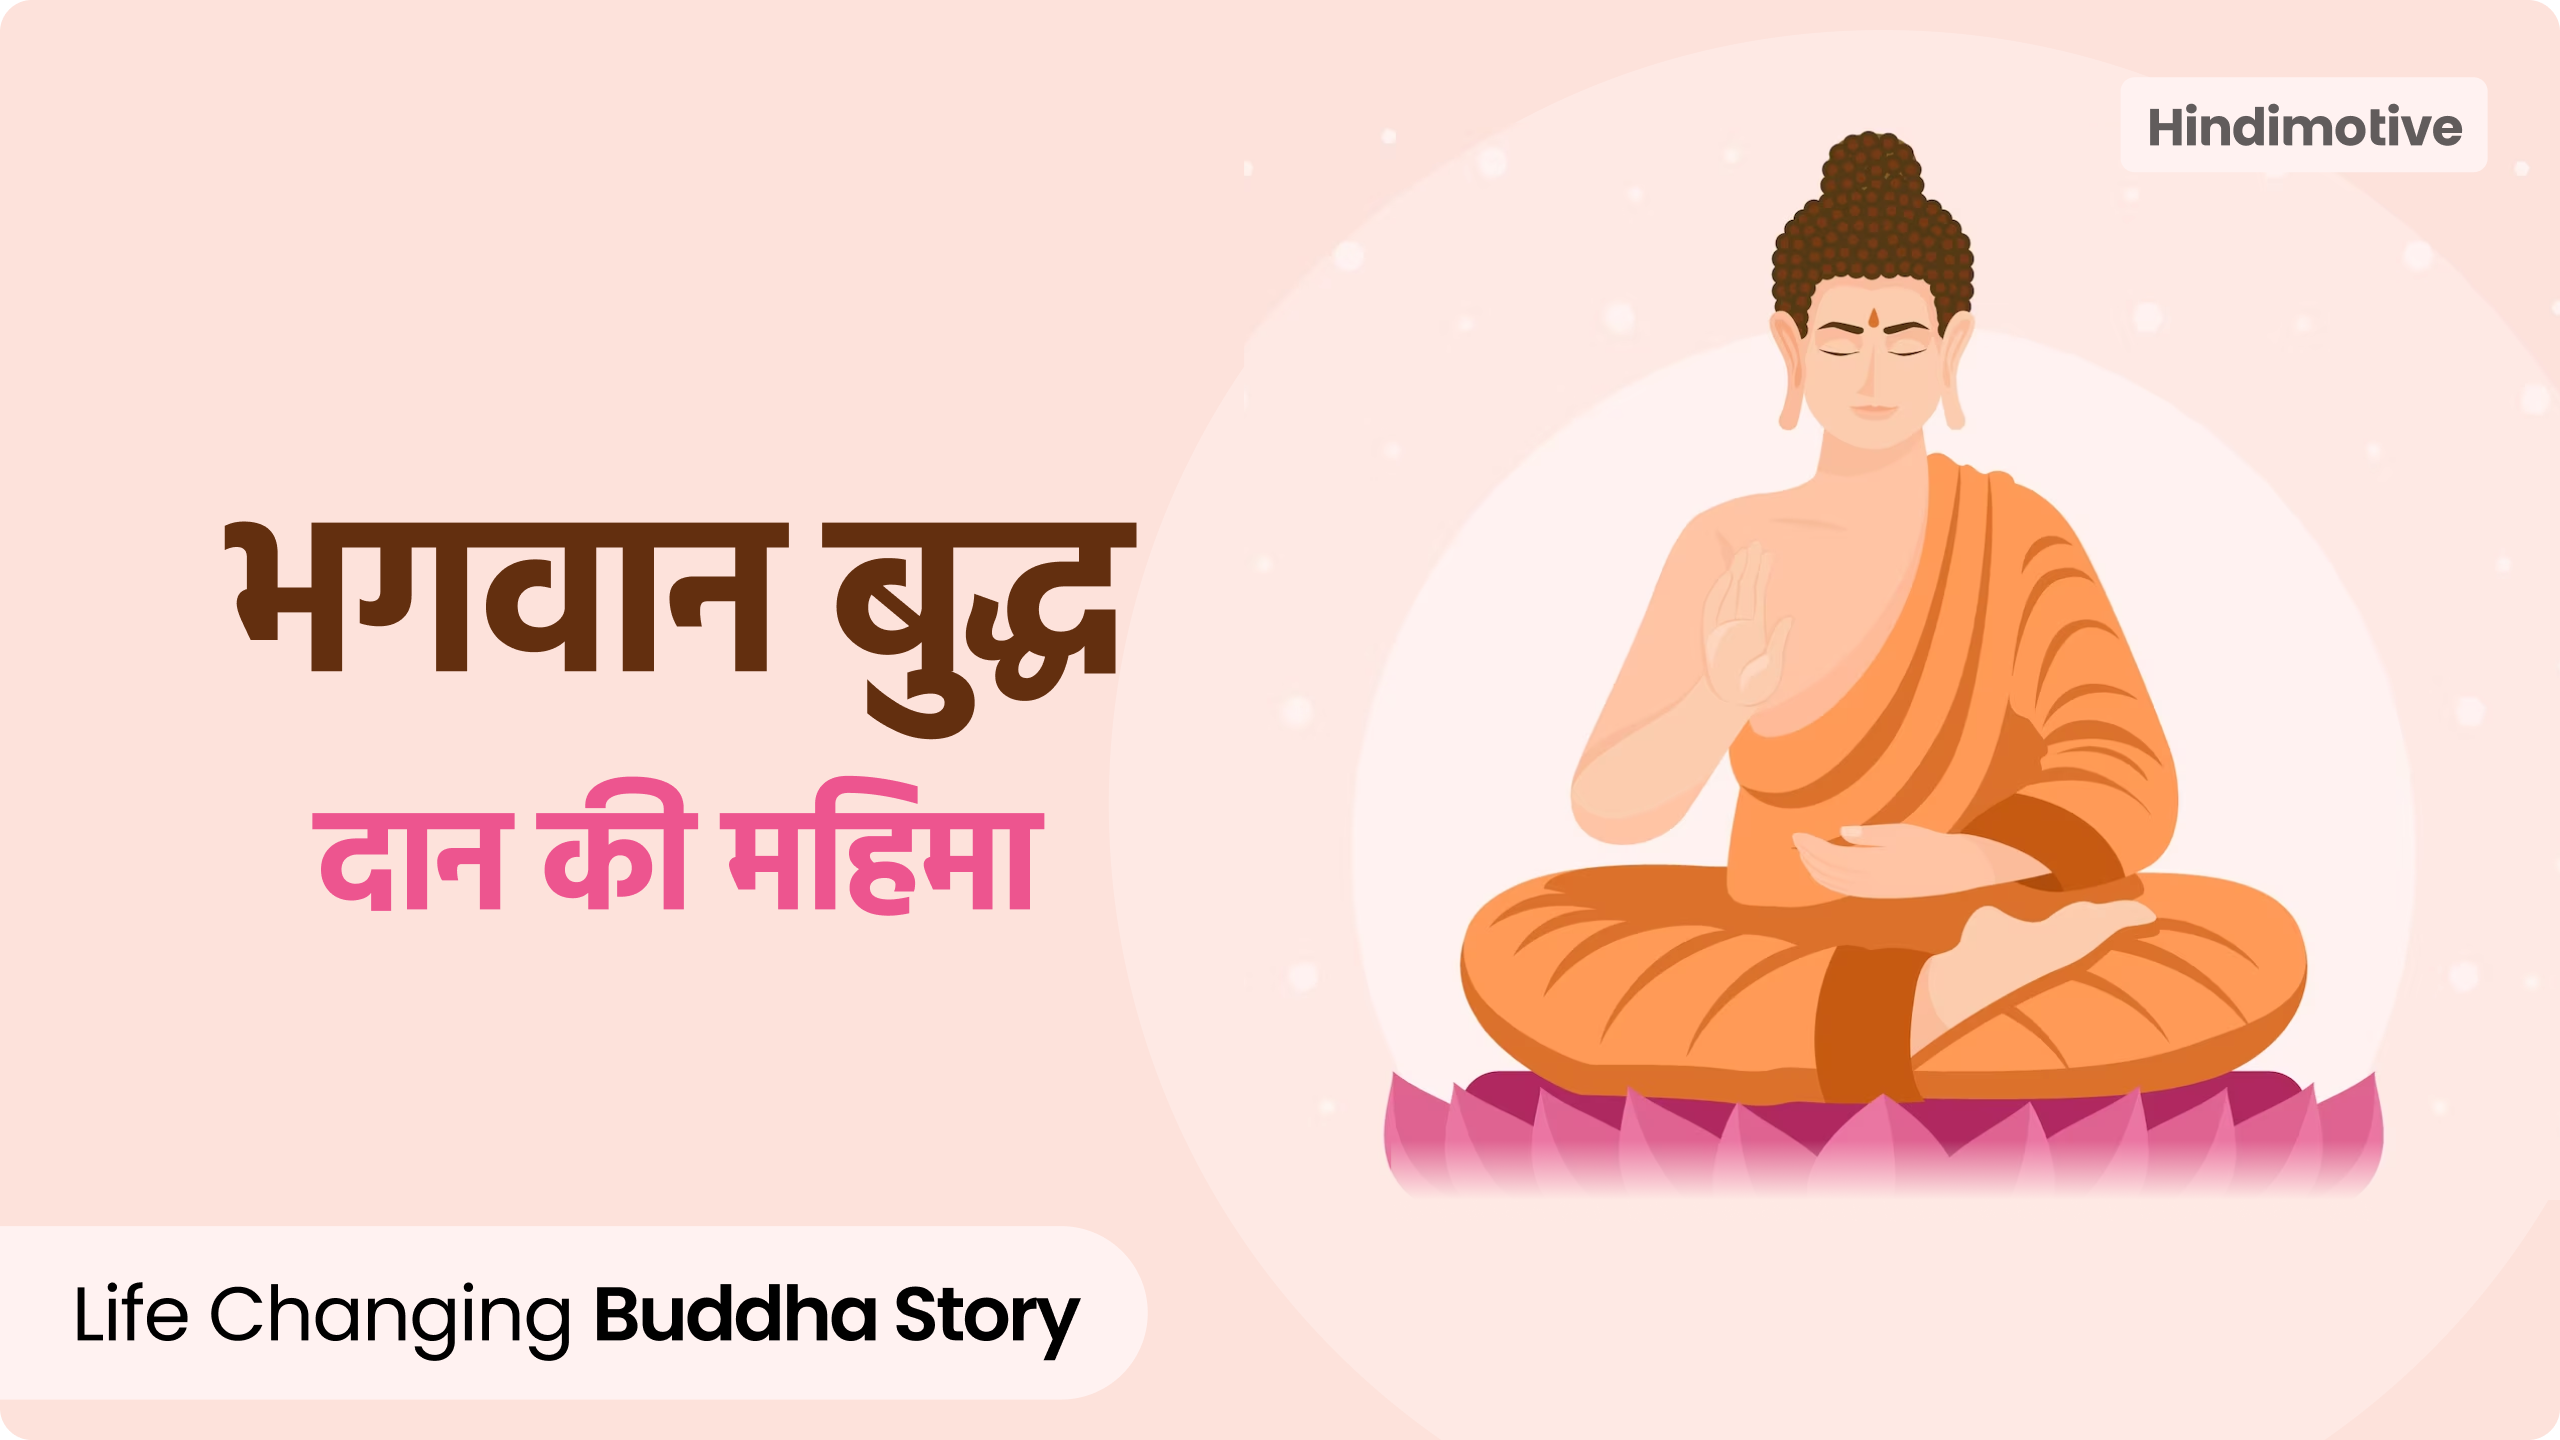 gautam buddha story, daan kee mahima, hindimotive